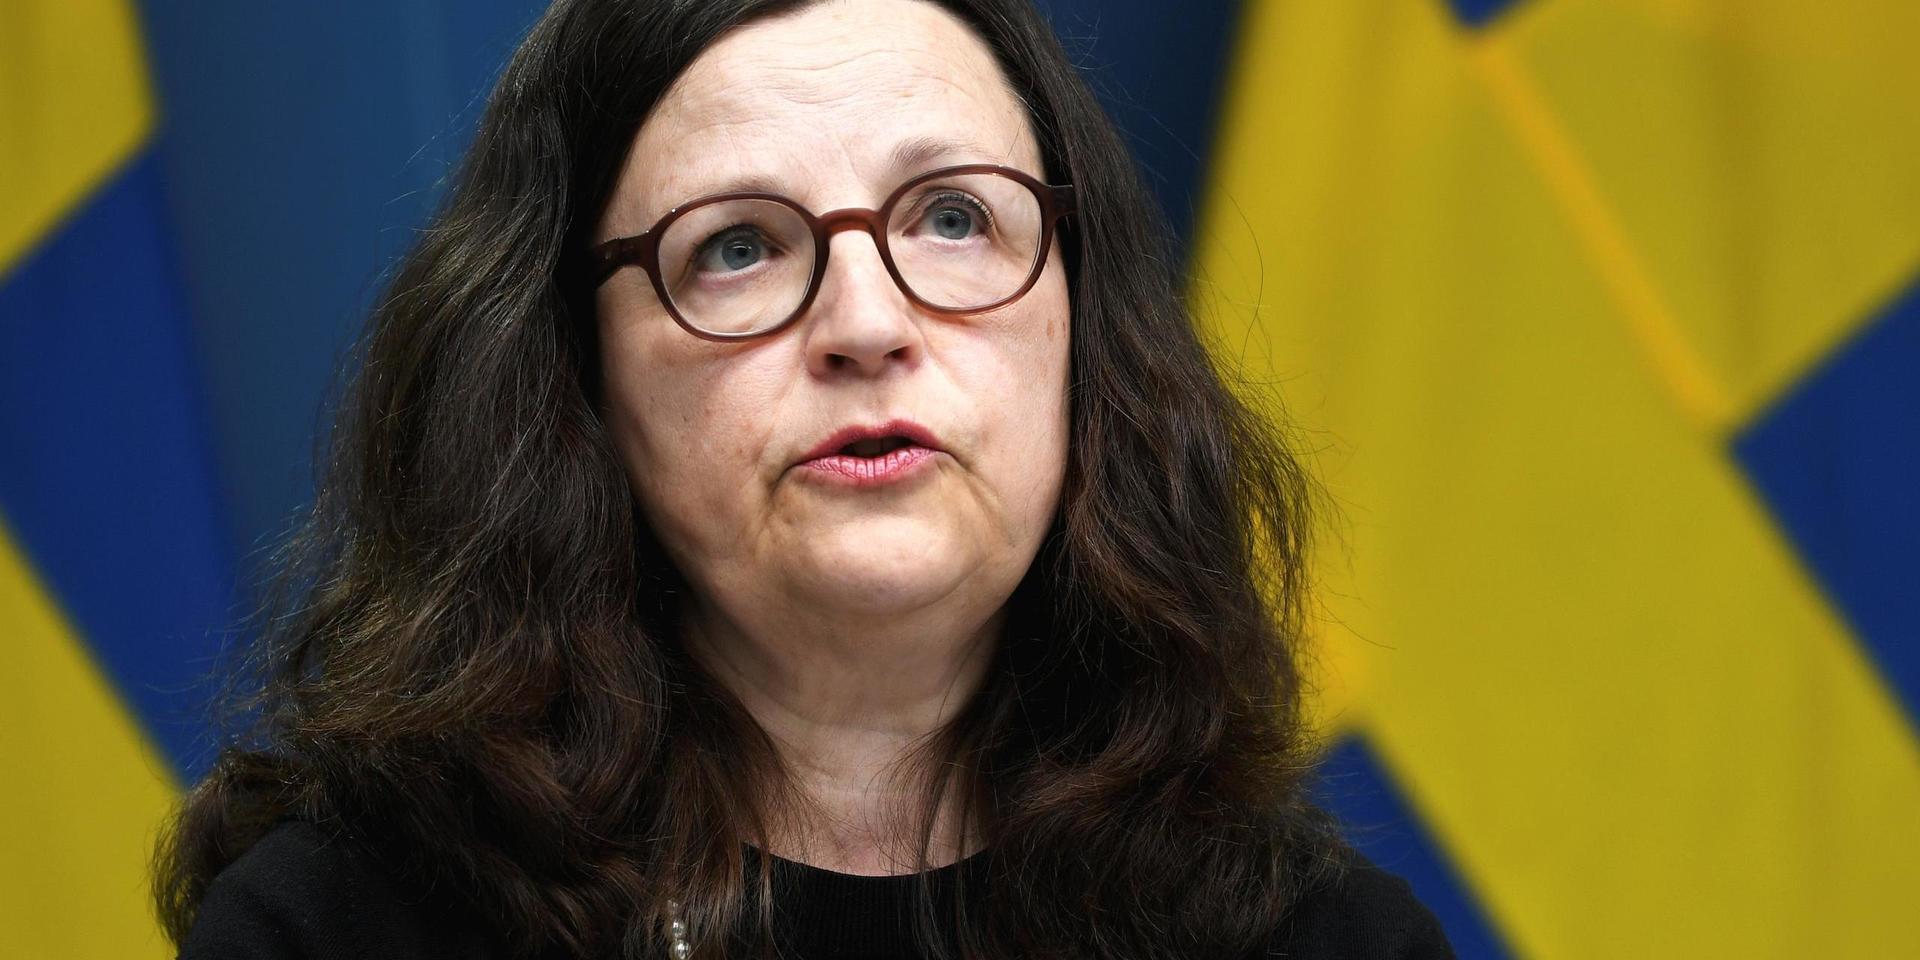 Utbildningsminister Anna Ekström (S) kommenterar kritiken mot Pisa.